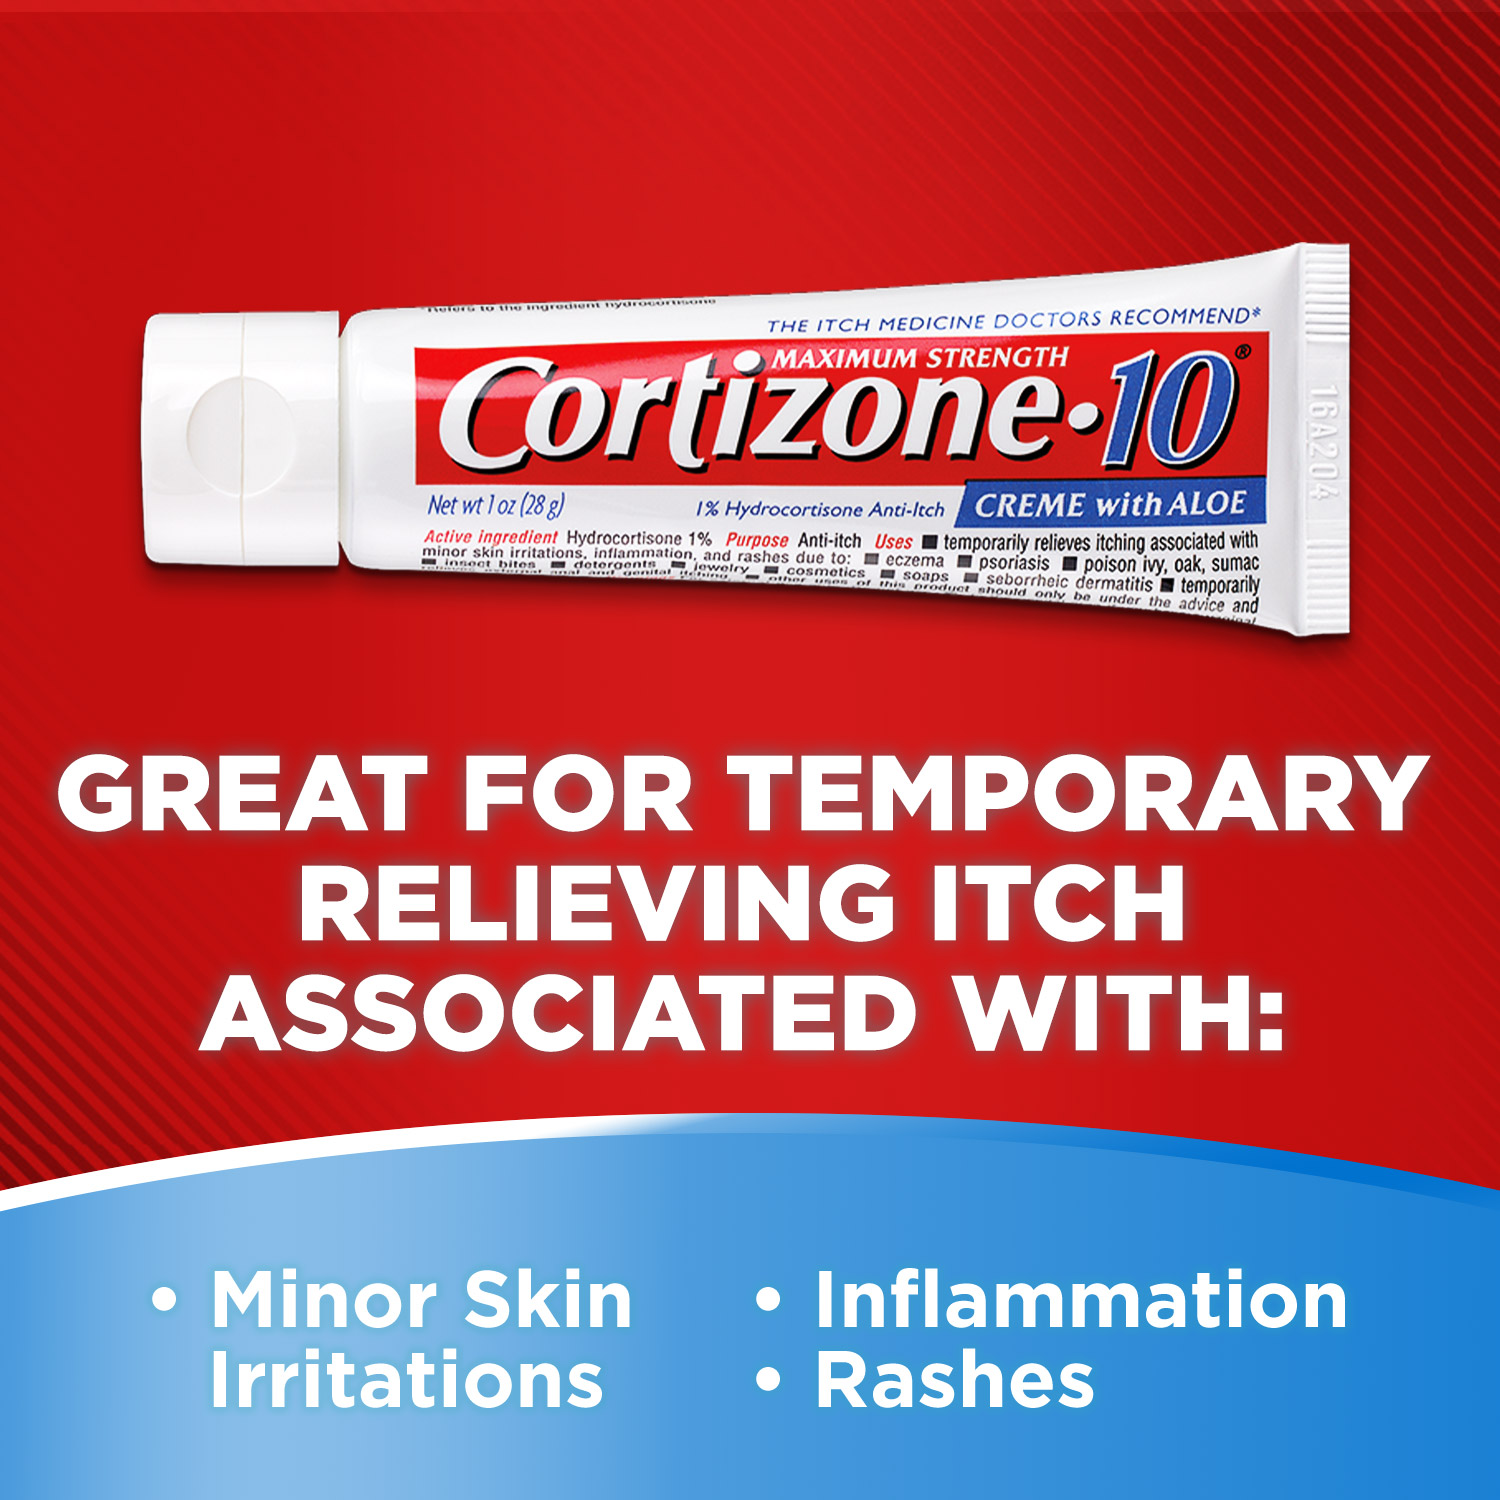 Cortizone 10 Maximum Strength, Anti Itch Crème (1 Oz) - image 4 of 7